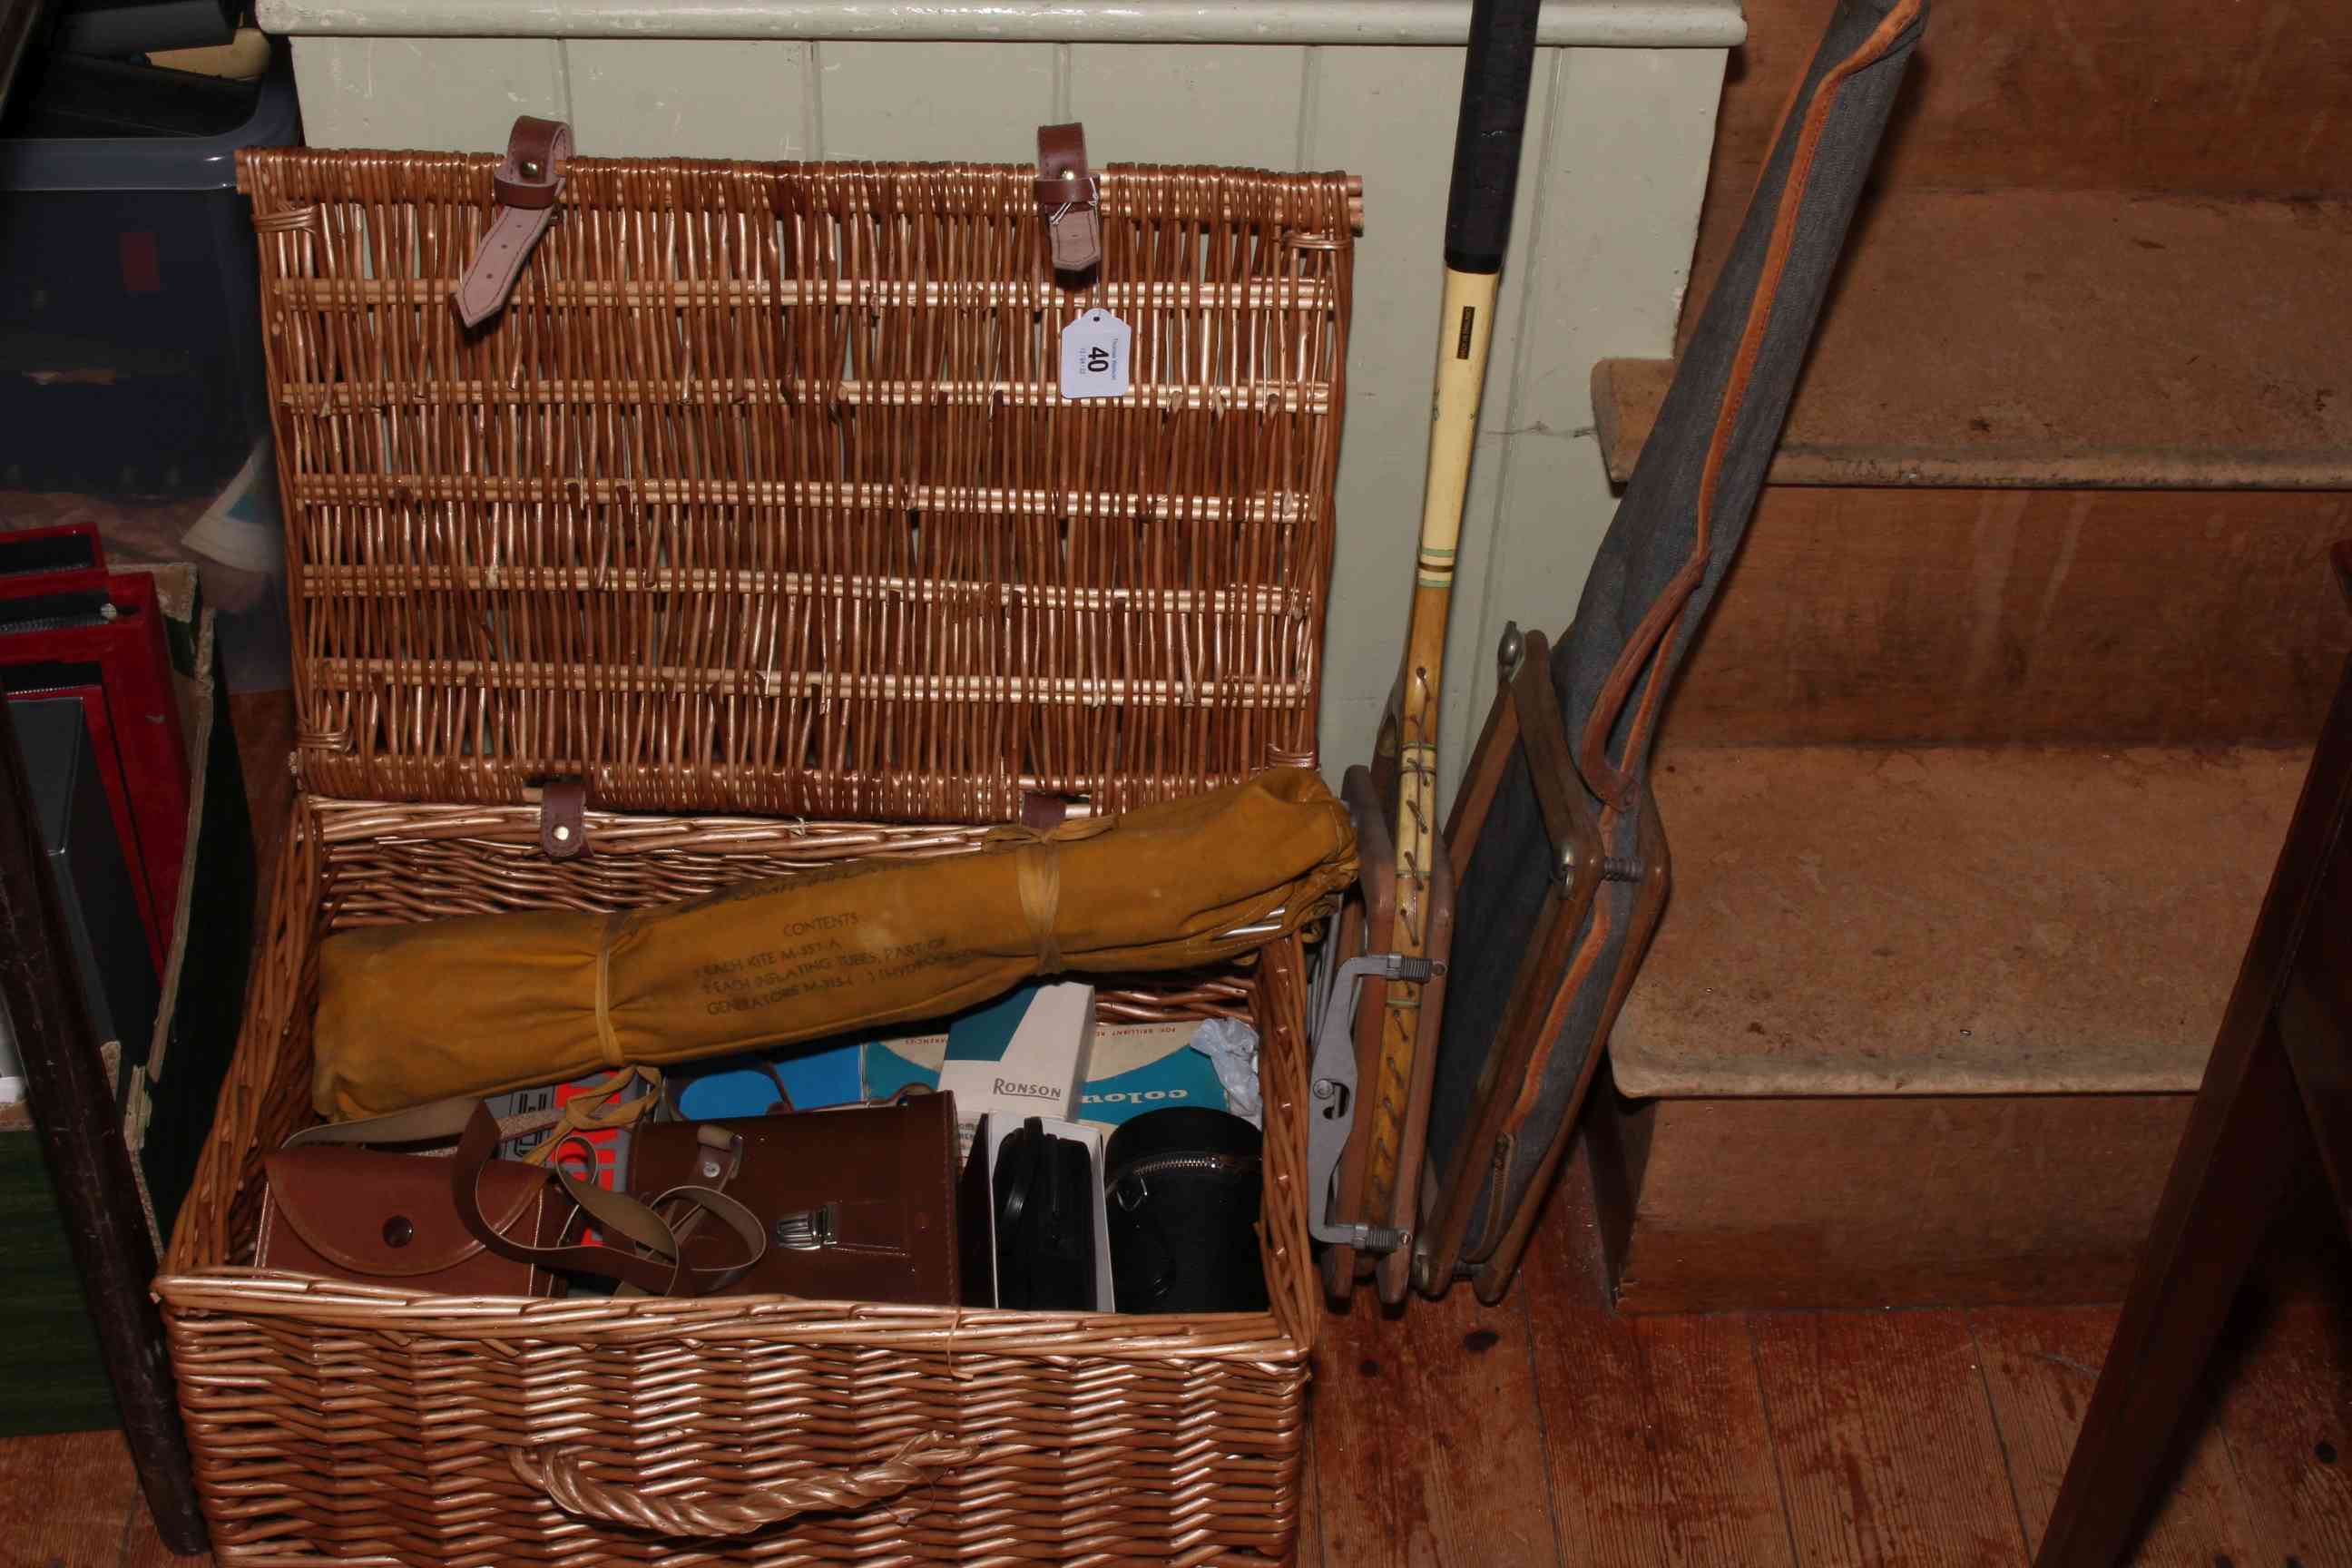 Picnic basket, vintage tennis rackets, binoculars, photographic equipment, etc.